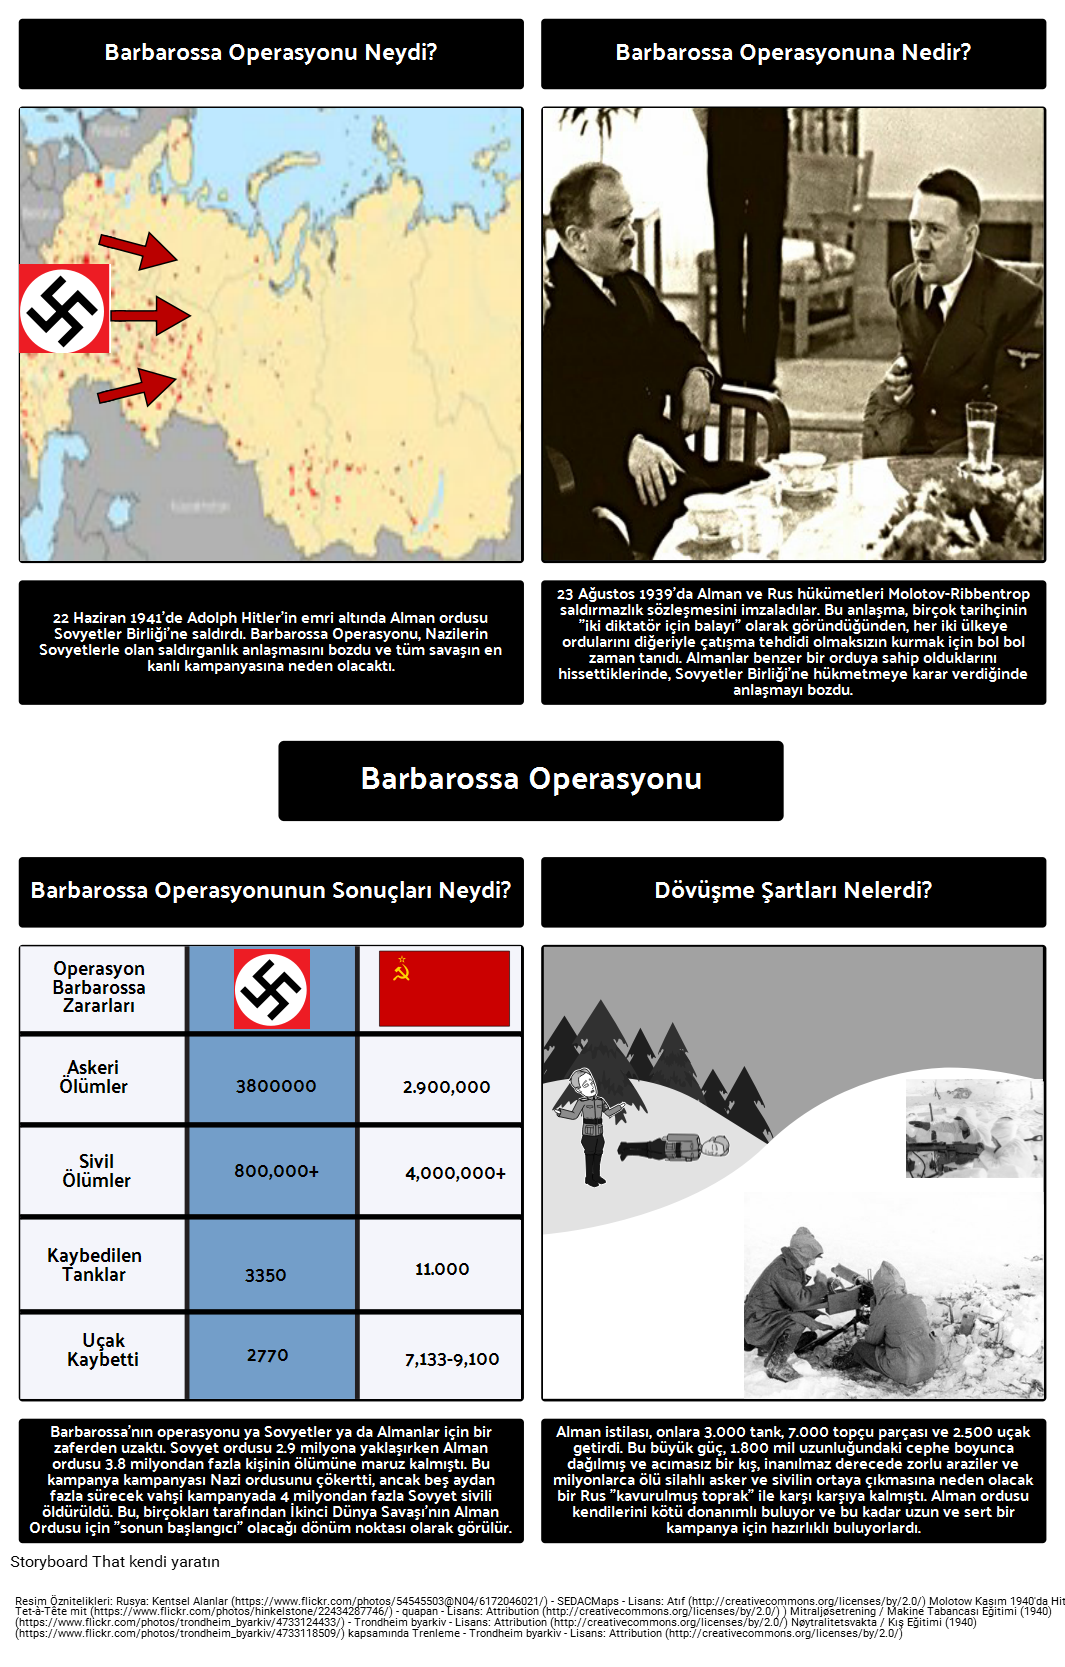 Barbarossa Operasyonu